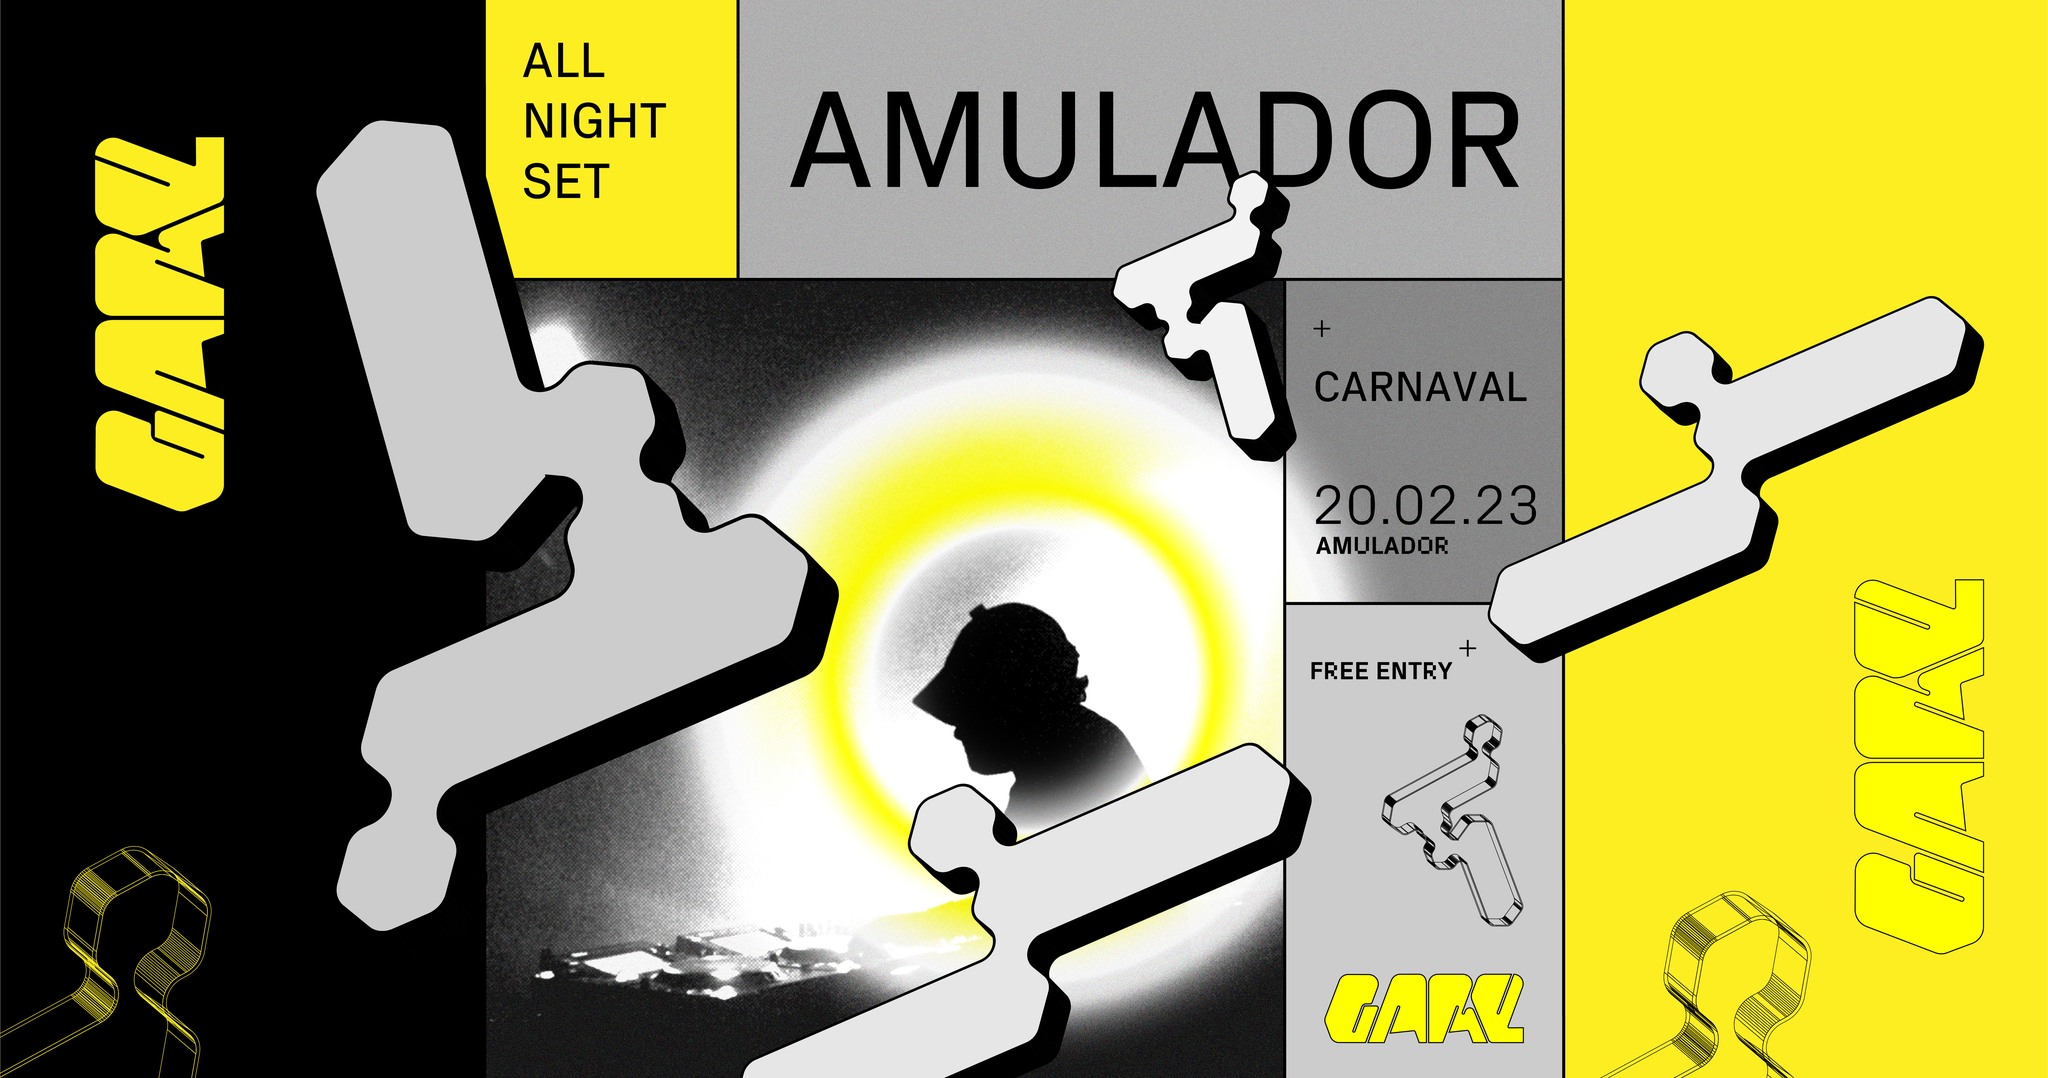 Carnaval 2023 * Amulador all night set [free entry]